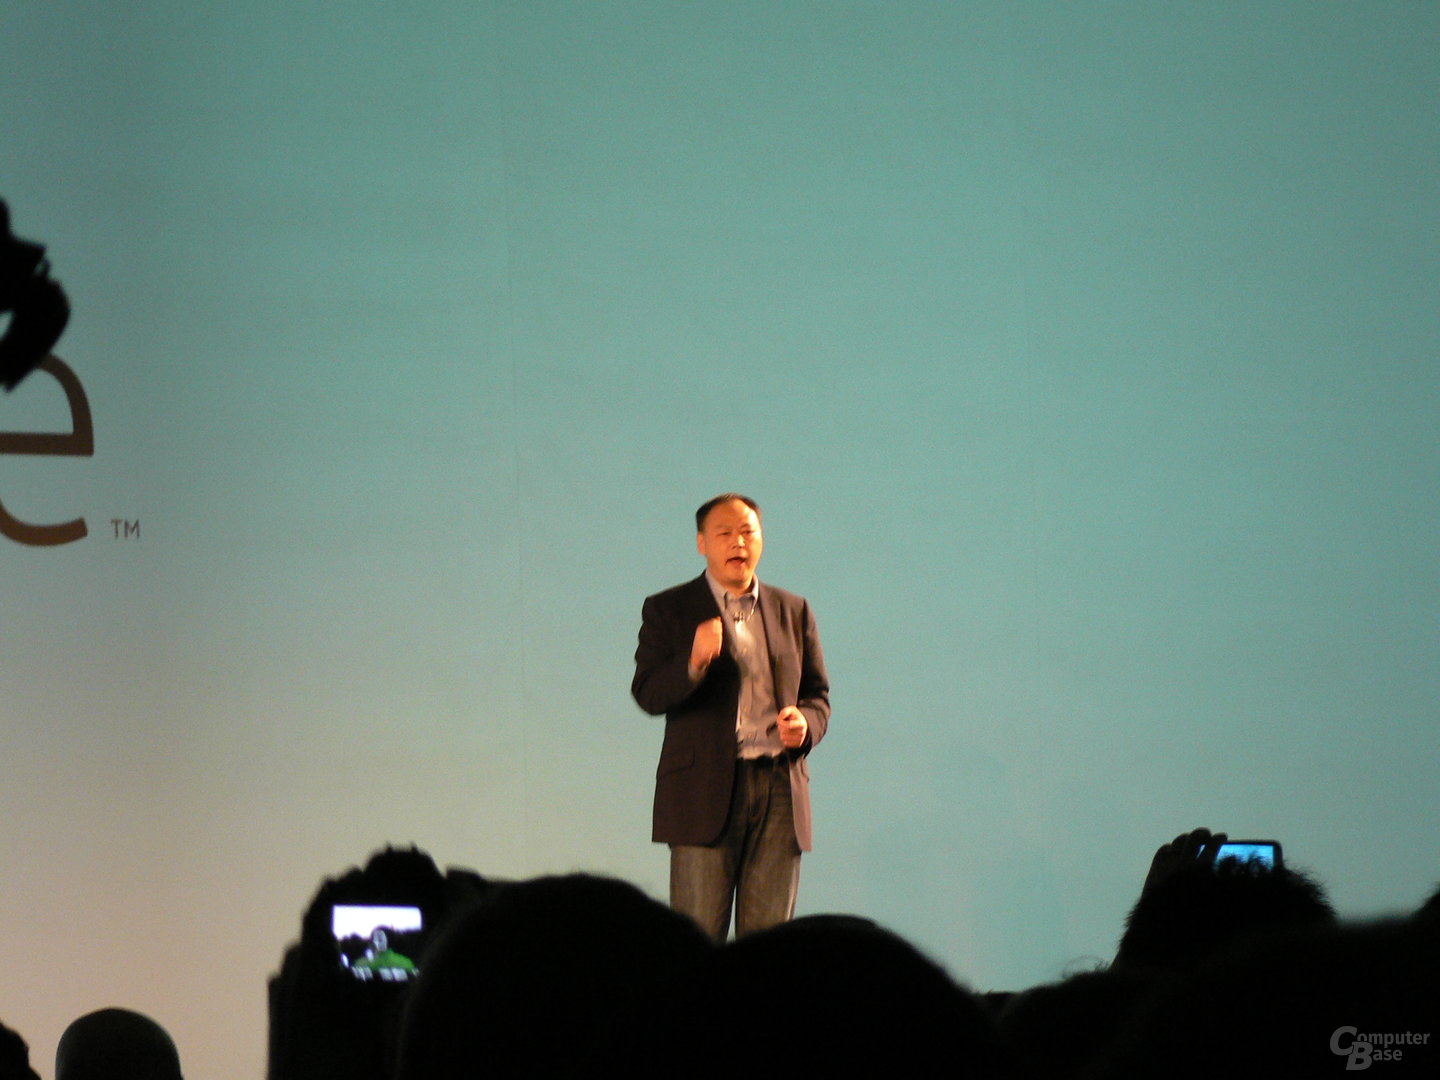 HTC-Präsentation, MWC 2012